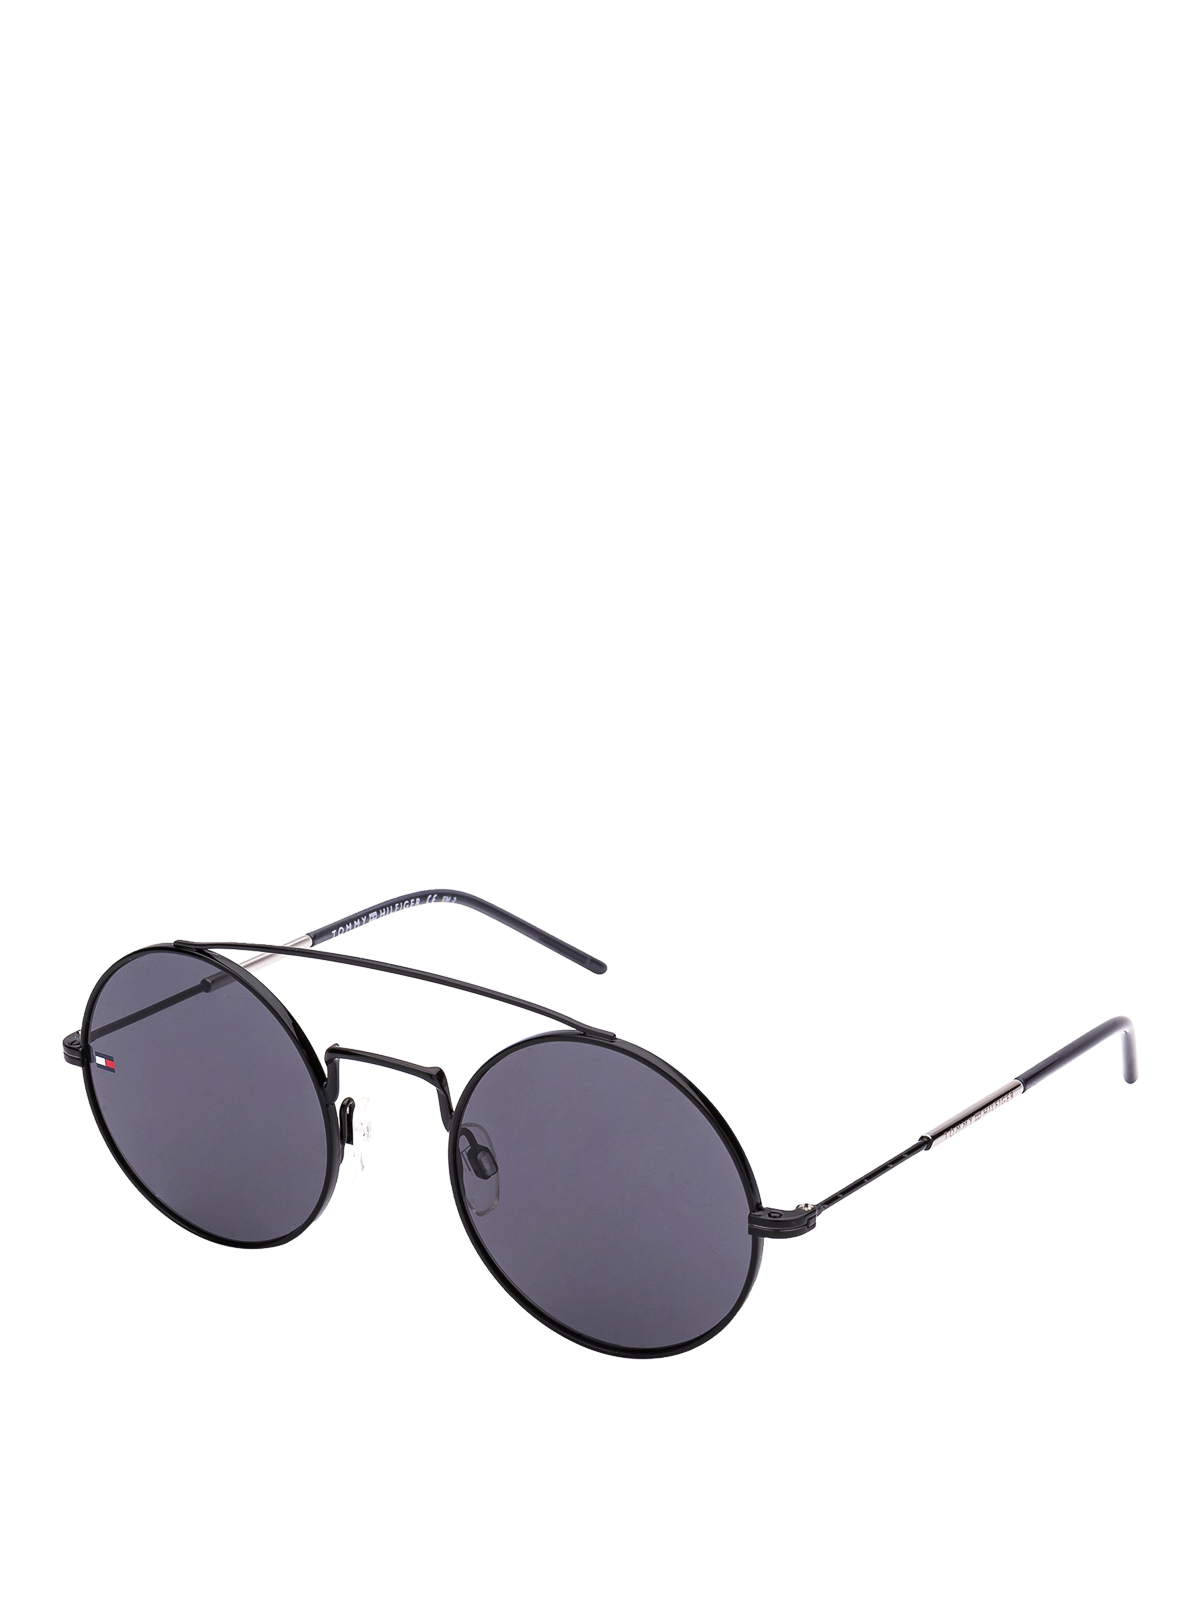 tommy hilfiger black sunglasses